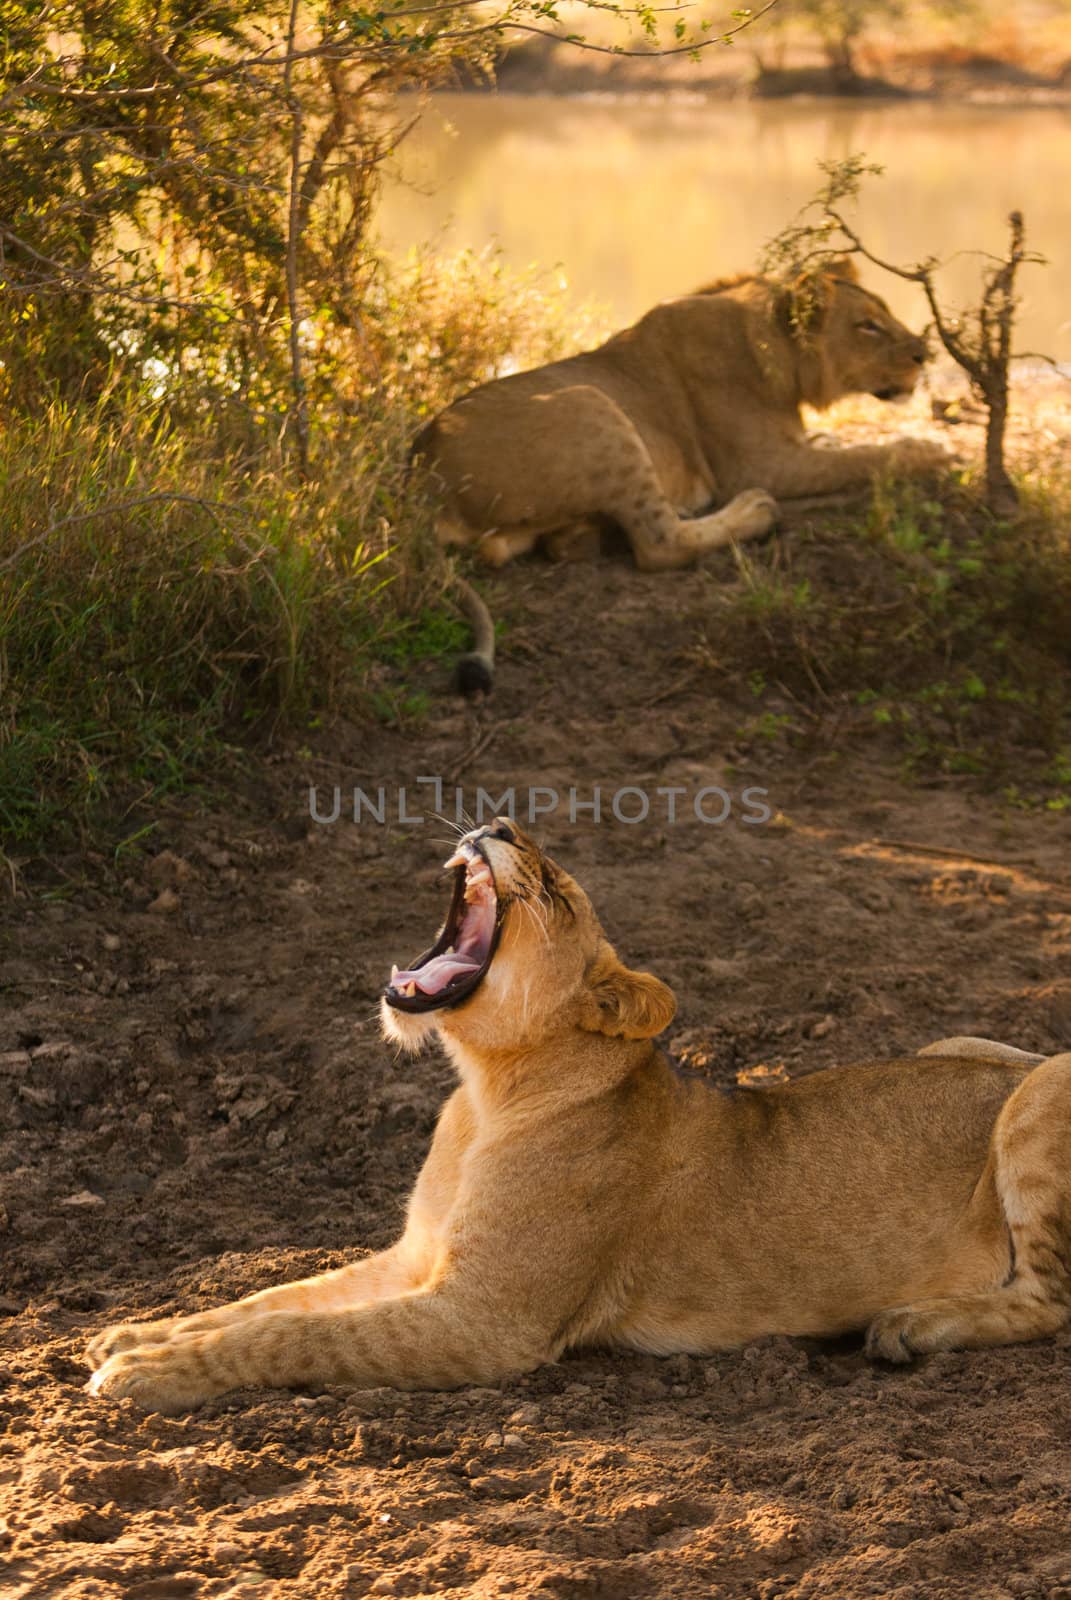 Yawning female lion by edan